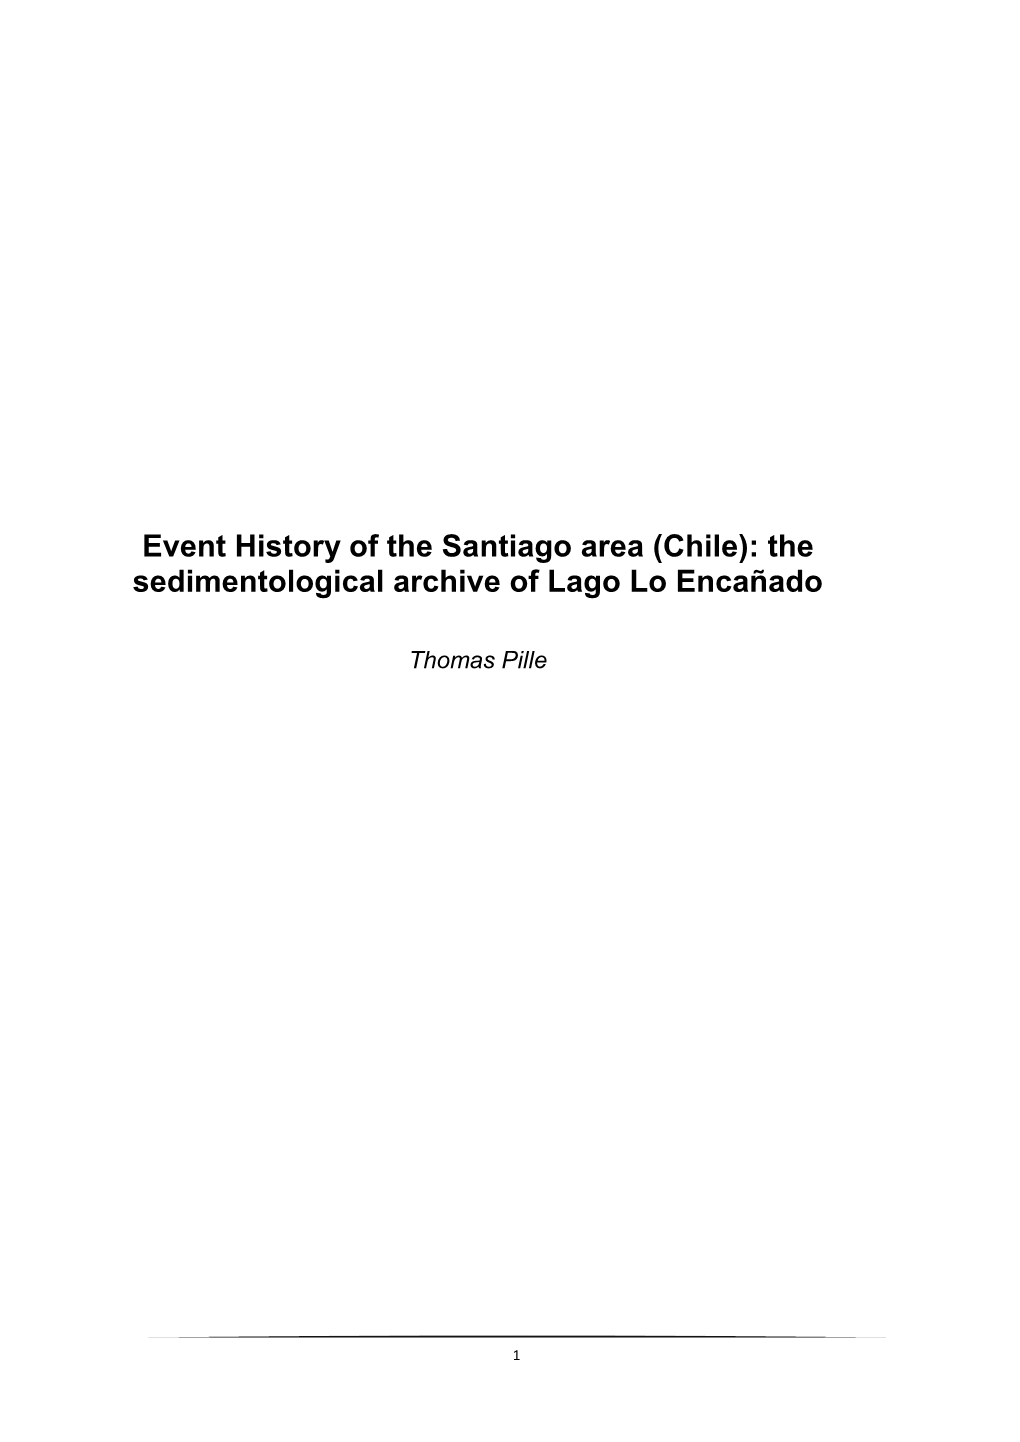 Event History of the Santiago Area (Chile): the Sedimentological Archive of Lago Lo Encañado